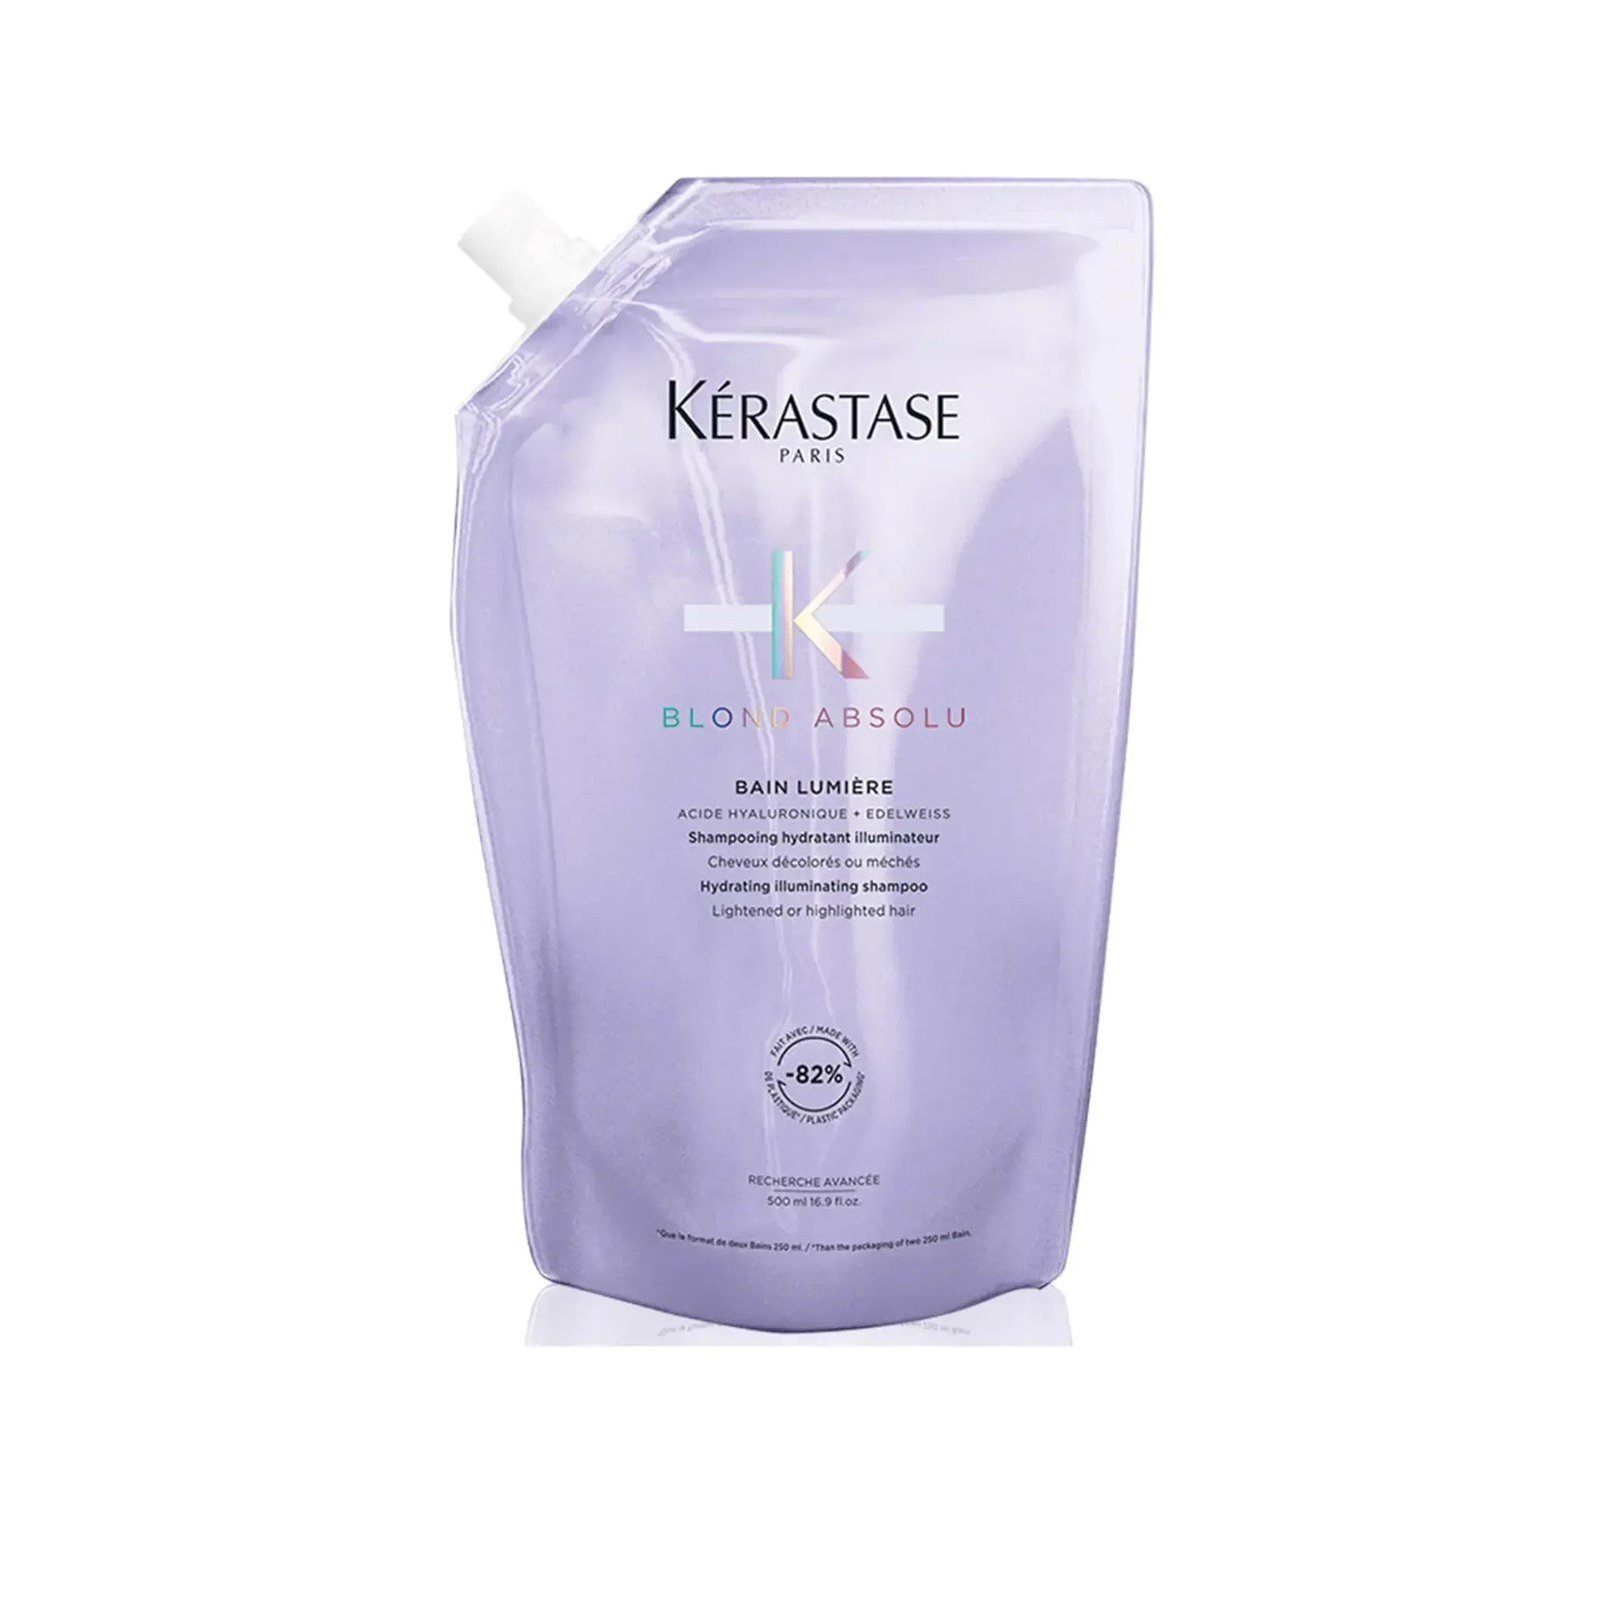 Kérastase Blond Absolu Bain Lumière Shampoo Refill 500ml (16.9 fl oz)